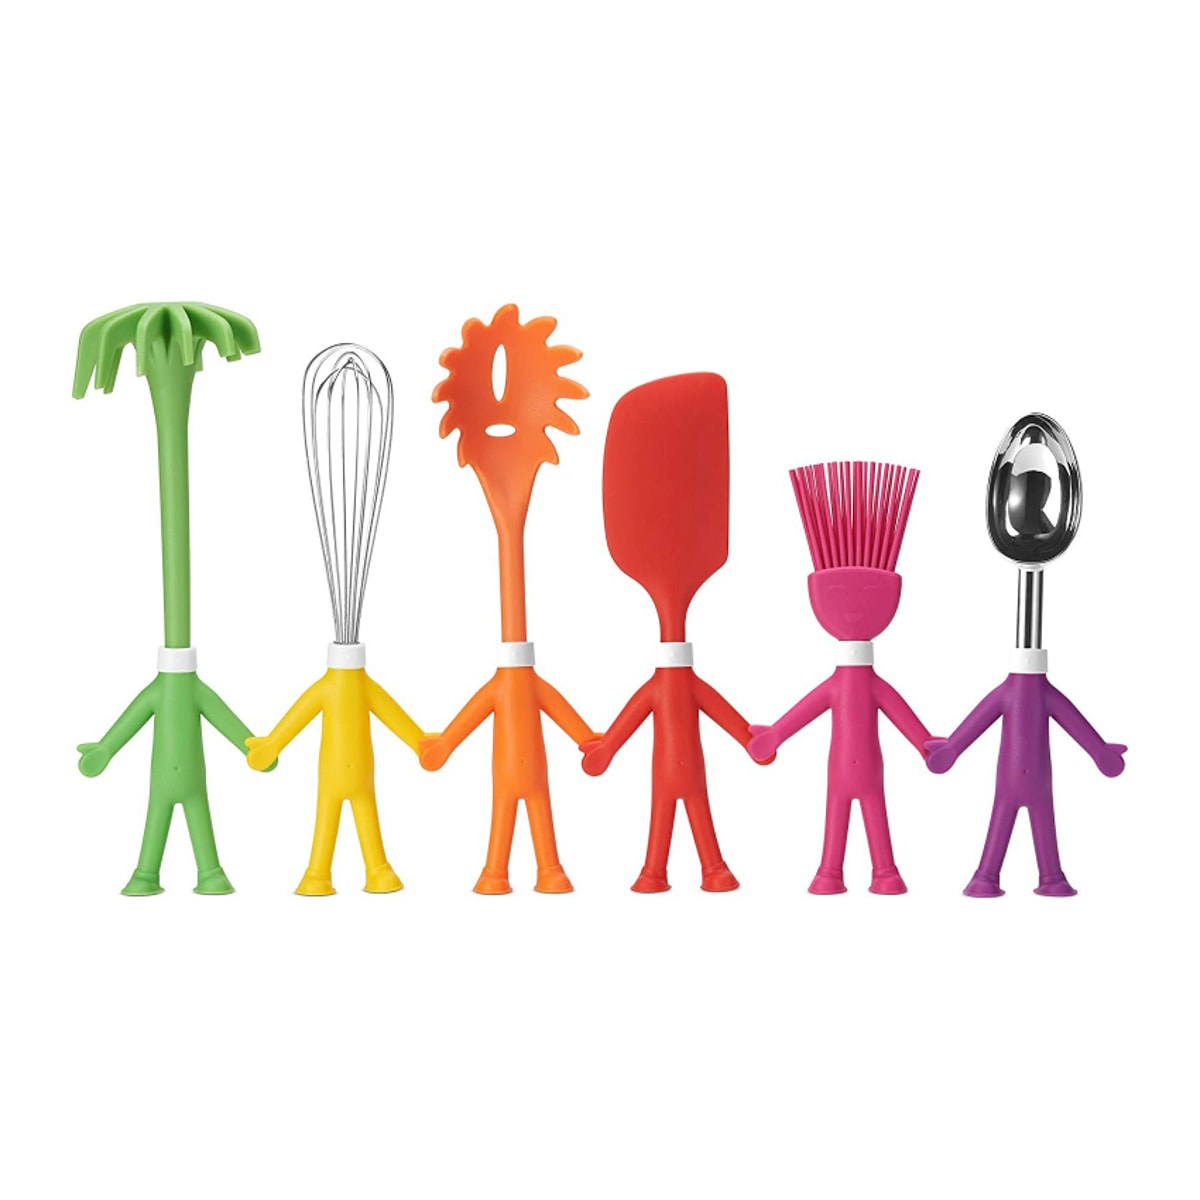 https://lilluna.com/wp-content/uploads/2023/04/amazon-kids-silly-kitchen-utensils.jpg